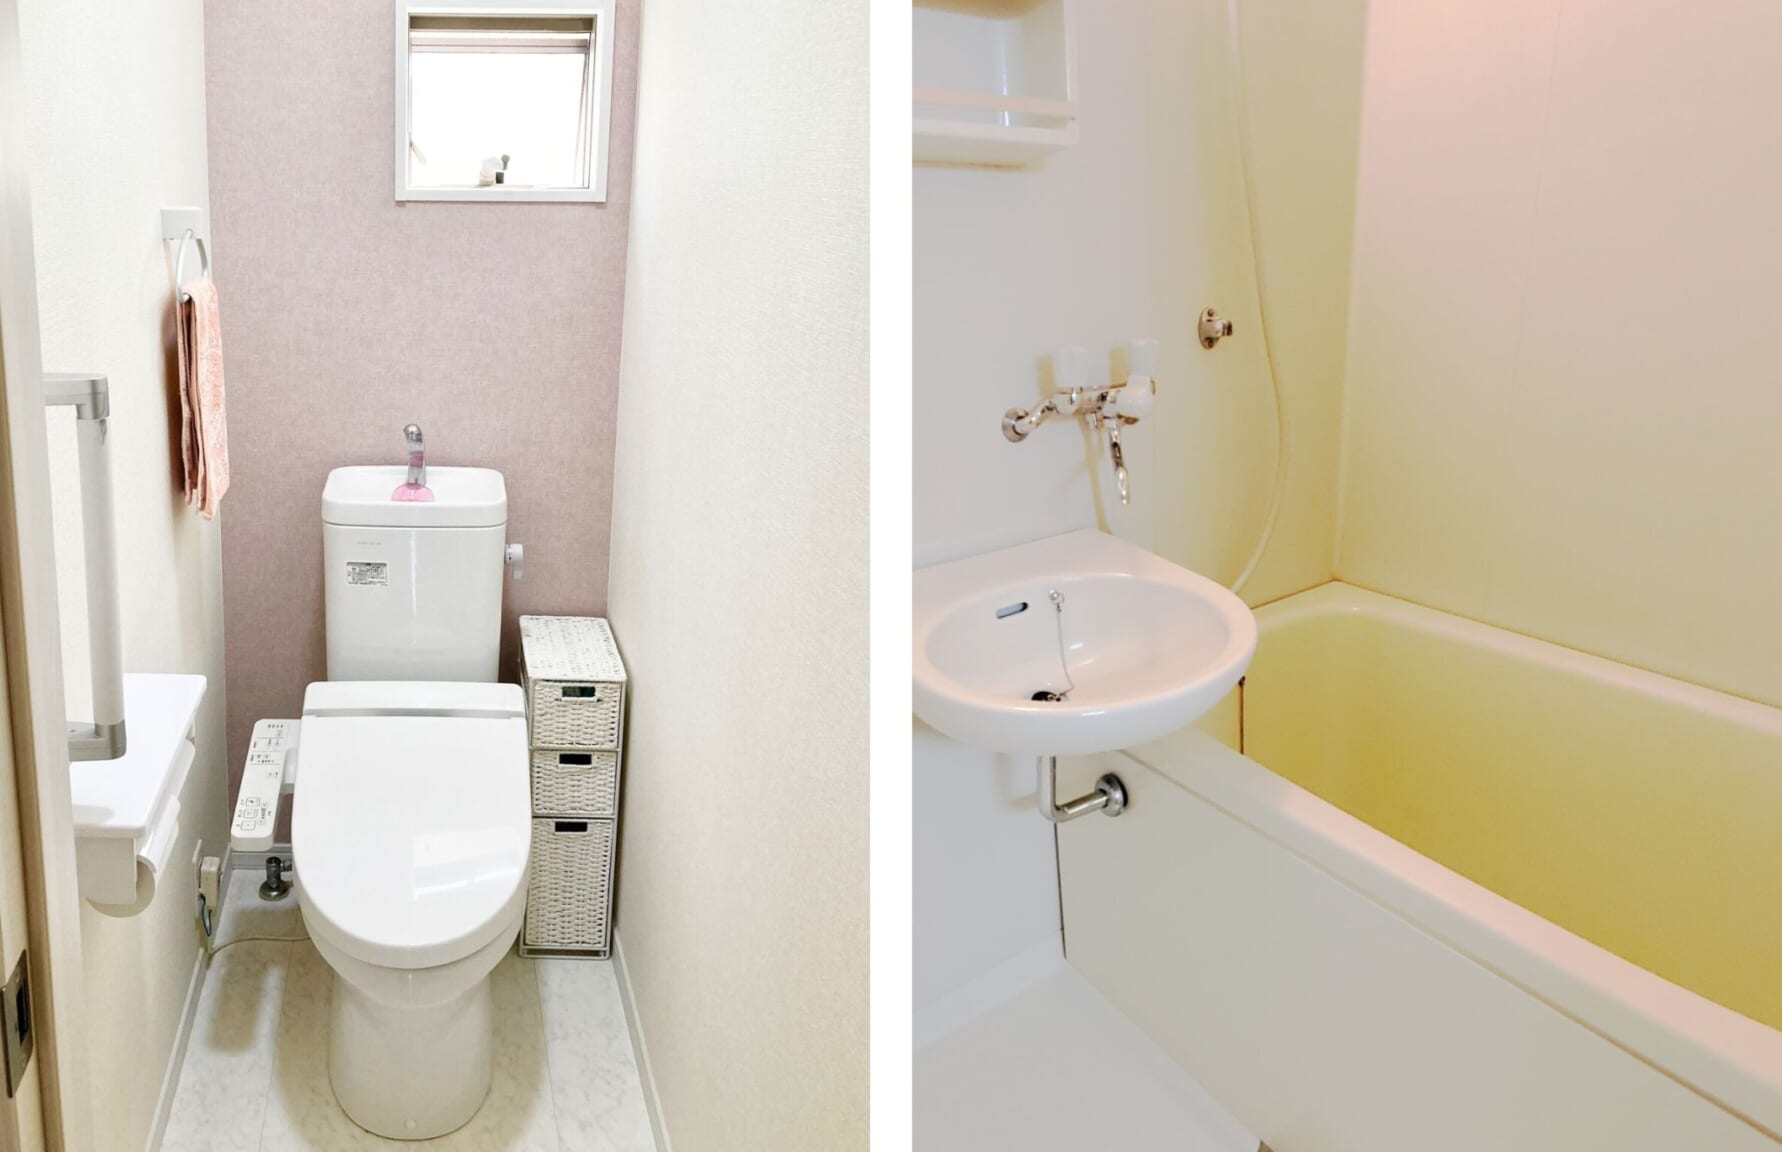 Toilet and bathroom in Japan